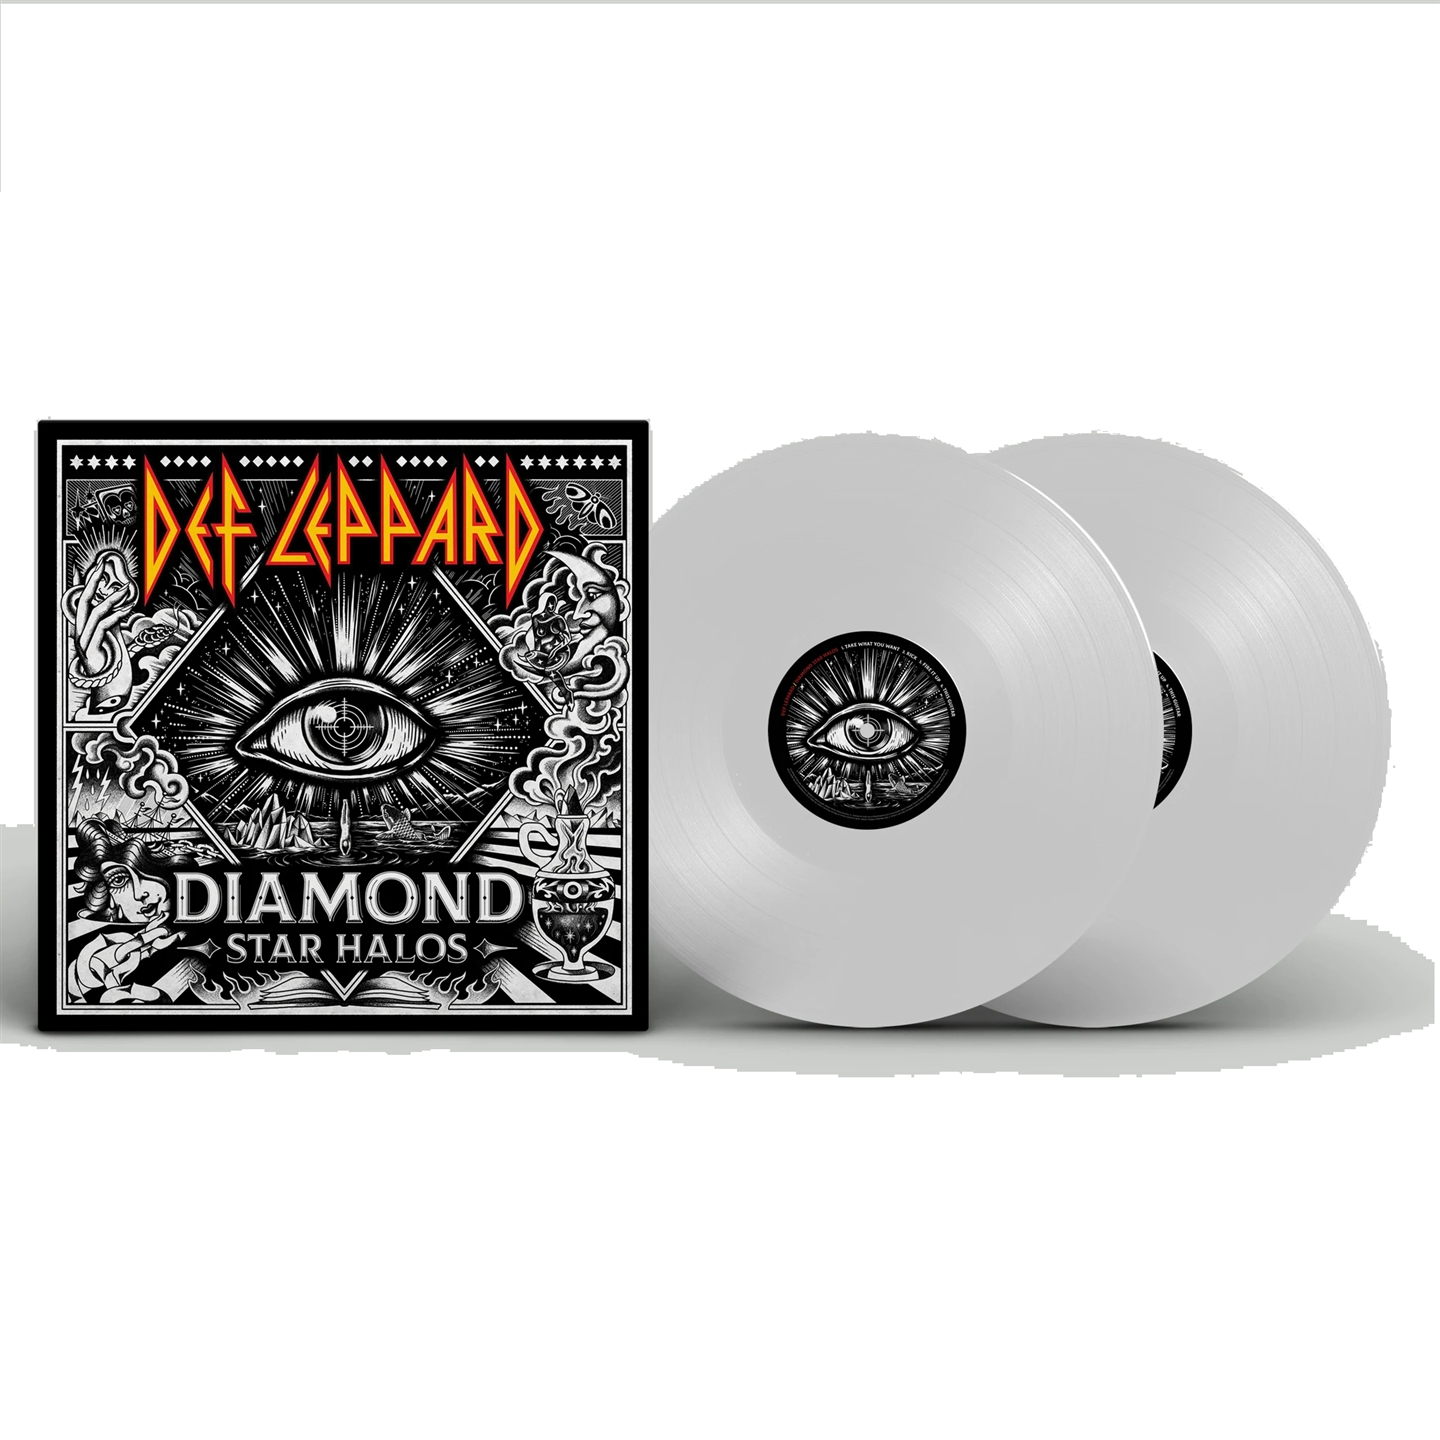 Diamond Star Halos (Vinyl Clear Limited Edt.) (Indie Exclusive)